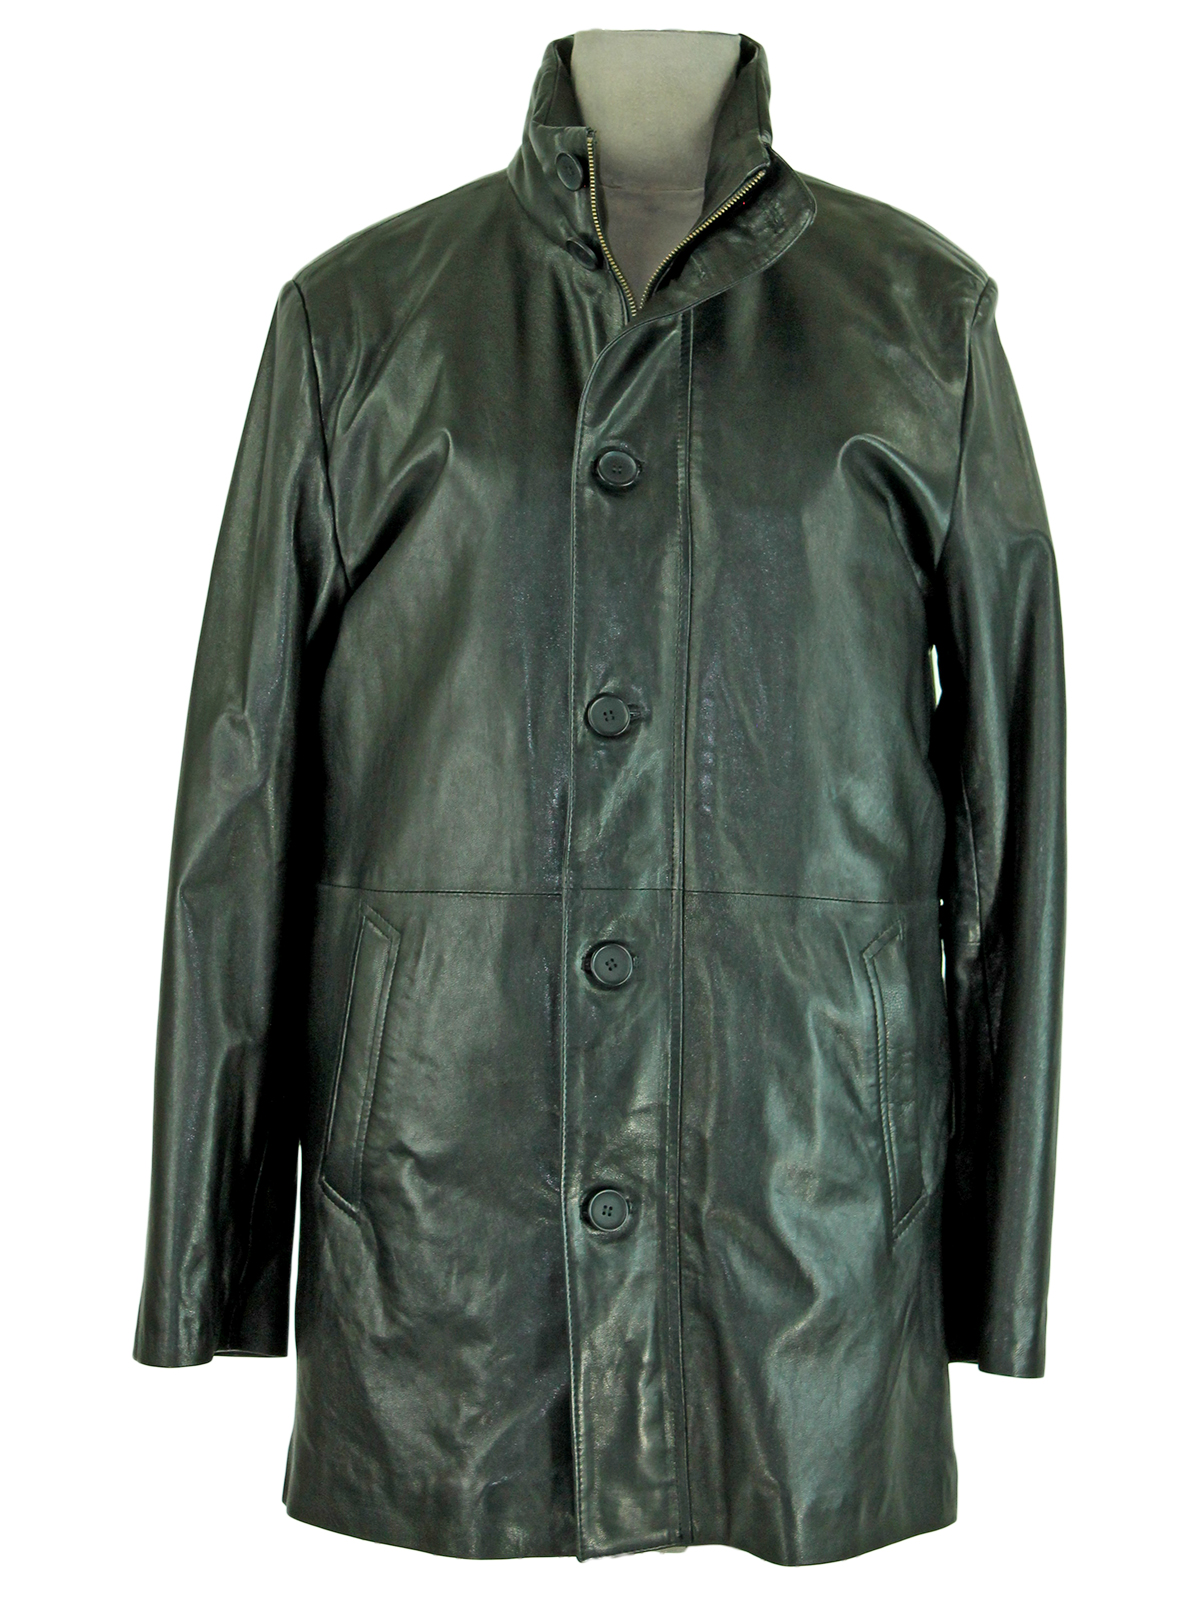 Black Leather Coat - Men's Leather Coat (M)| Day Furs